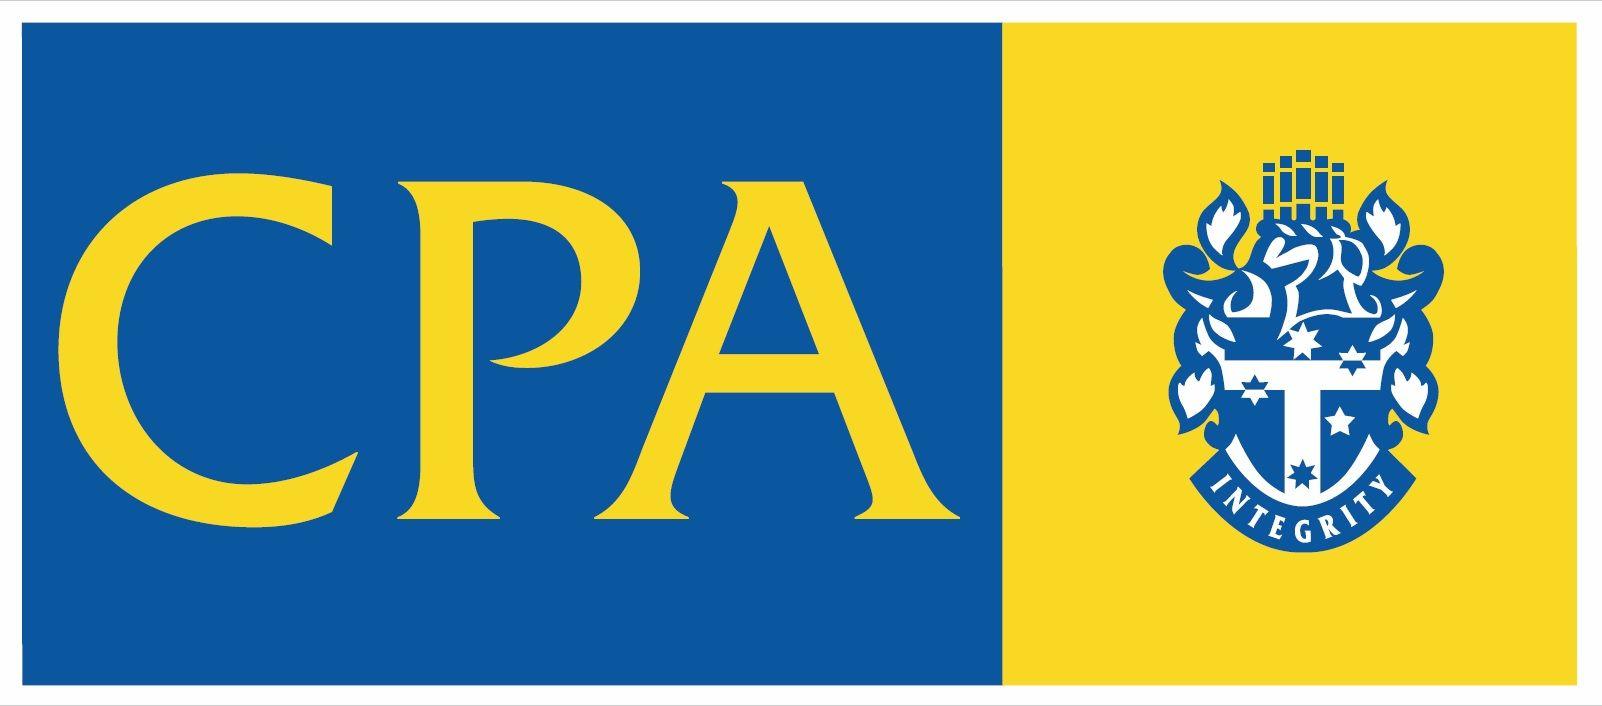 CPA Logo - cpa-logo-colour-with-line - Qgr Accountants